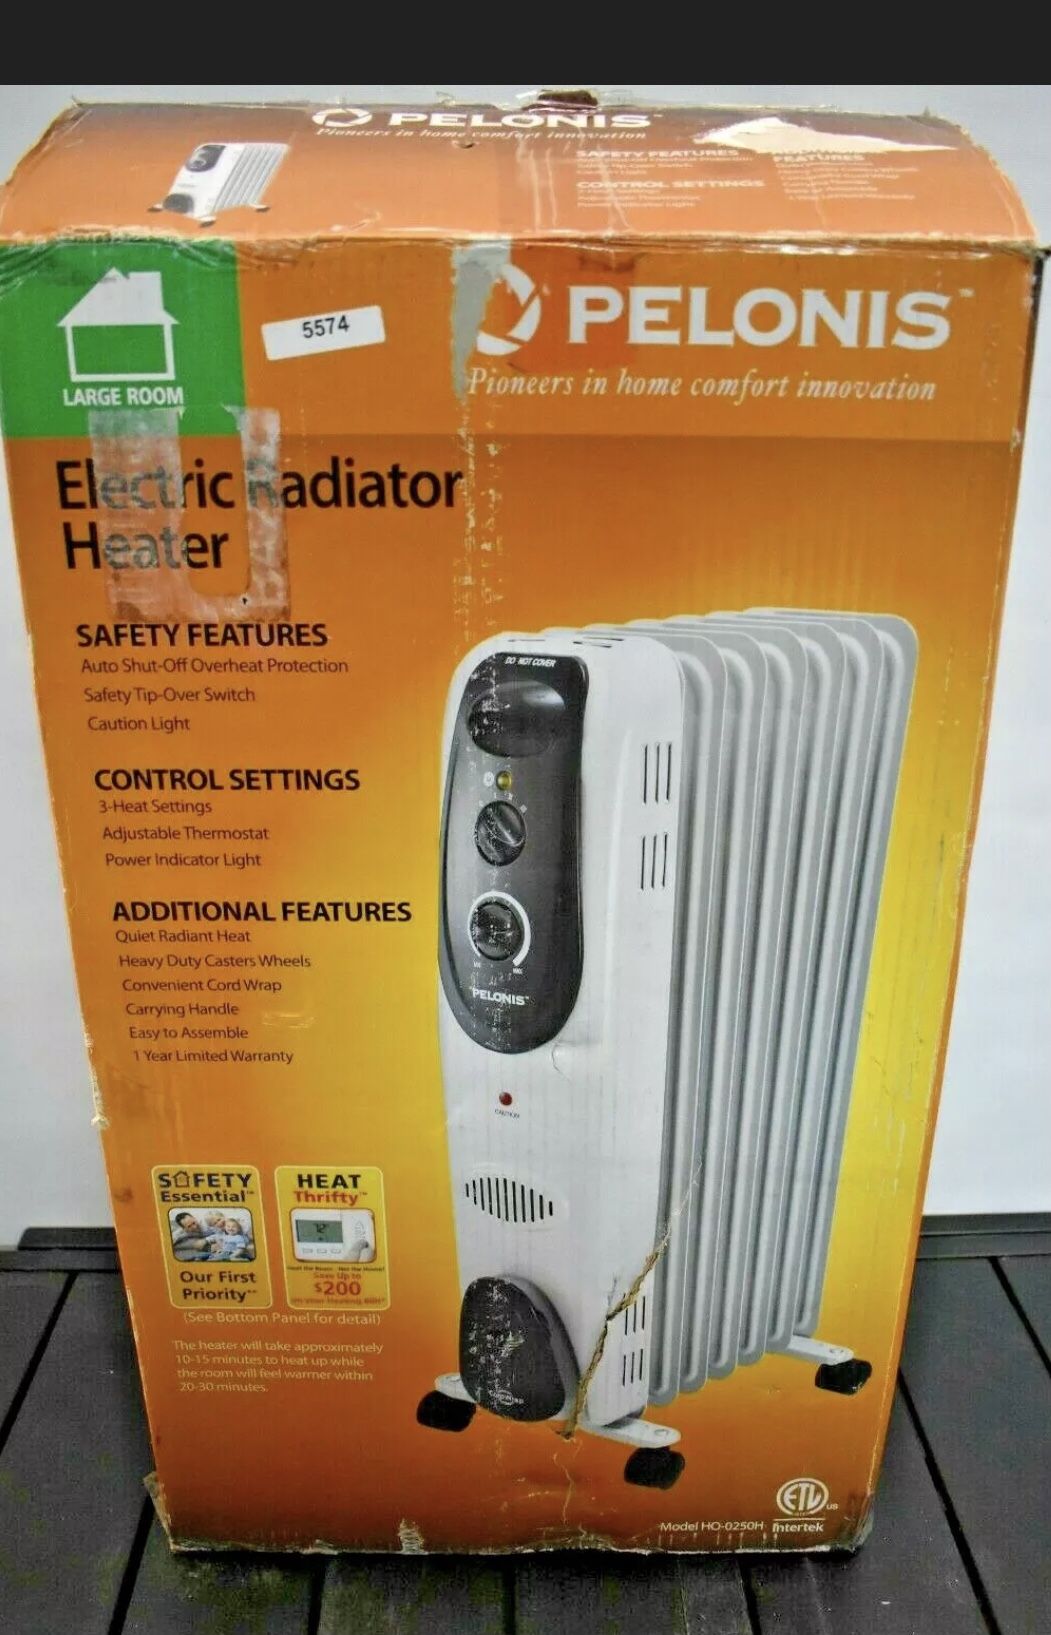 Pelonis electric radiator heater